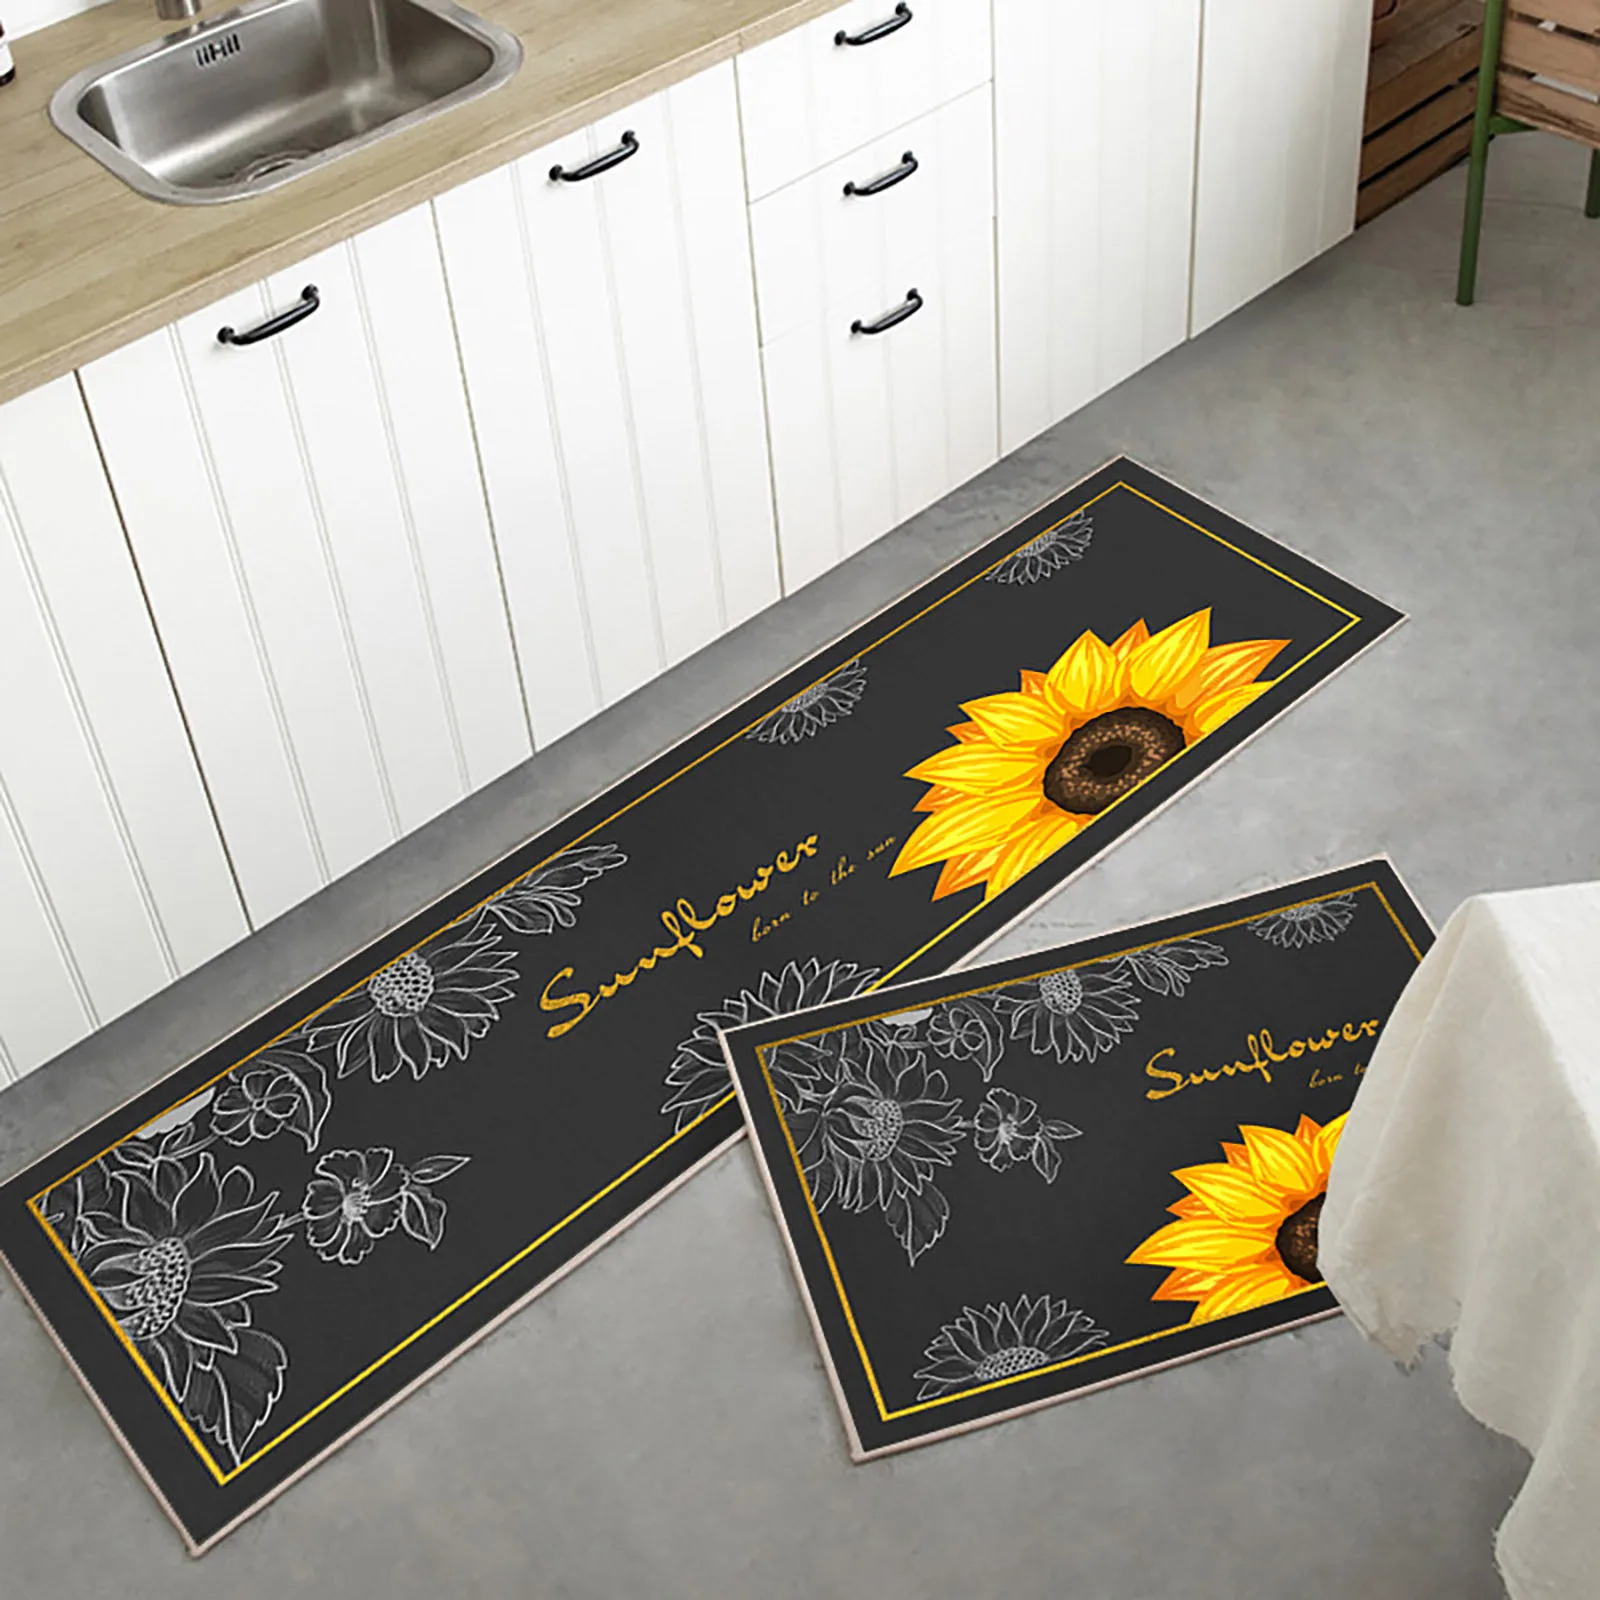 

Kitchen Mat 2pcs Sunflower Non-Skid Kitchen Rug Runner Floor Mat Carpet For Kitchen Floor Bathroom Laundry Doorway